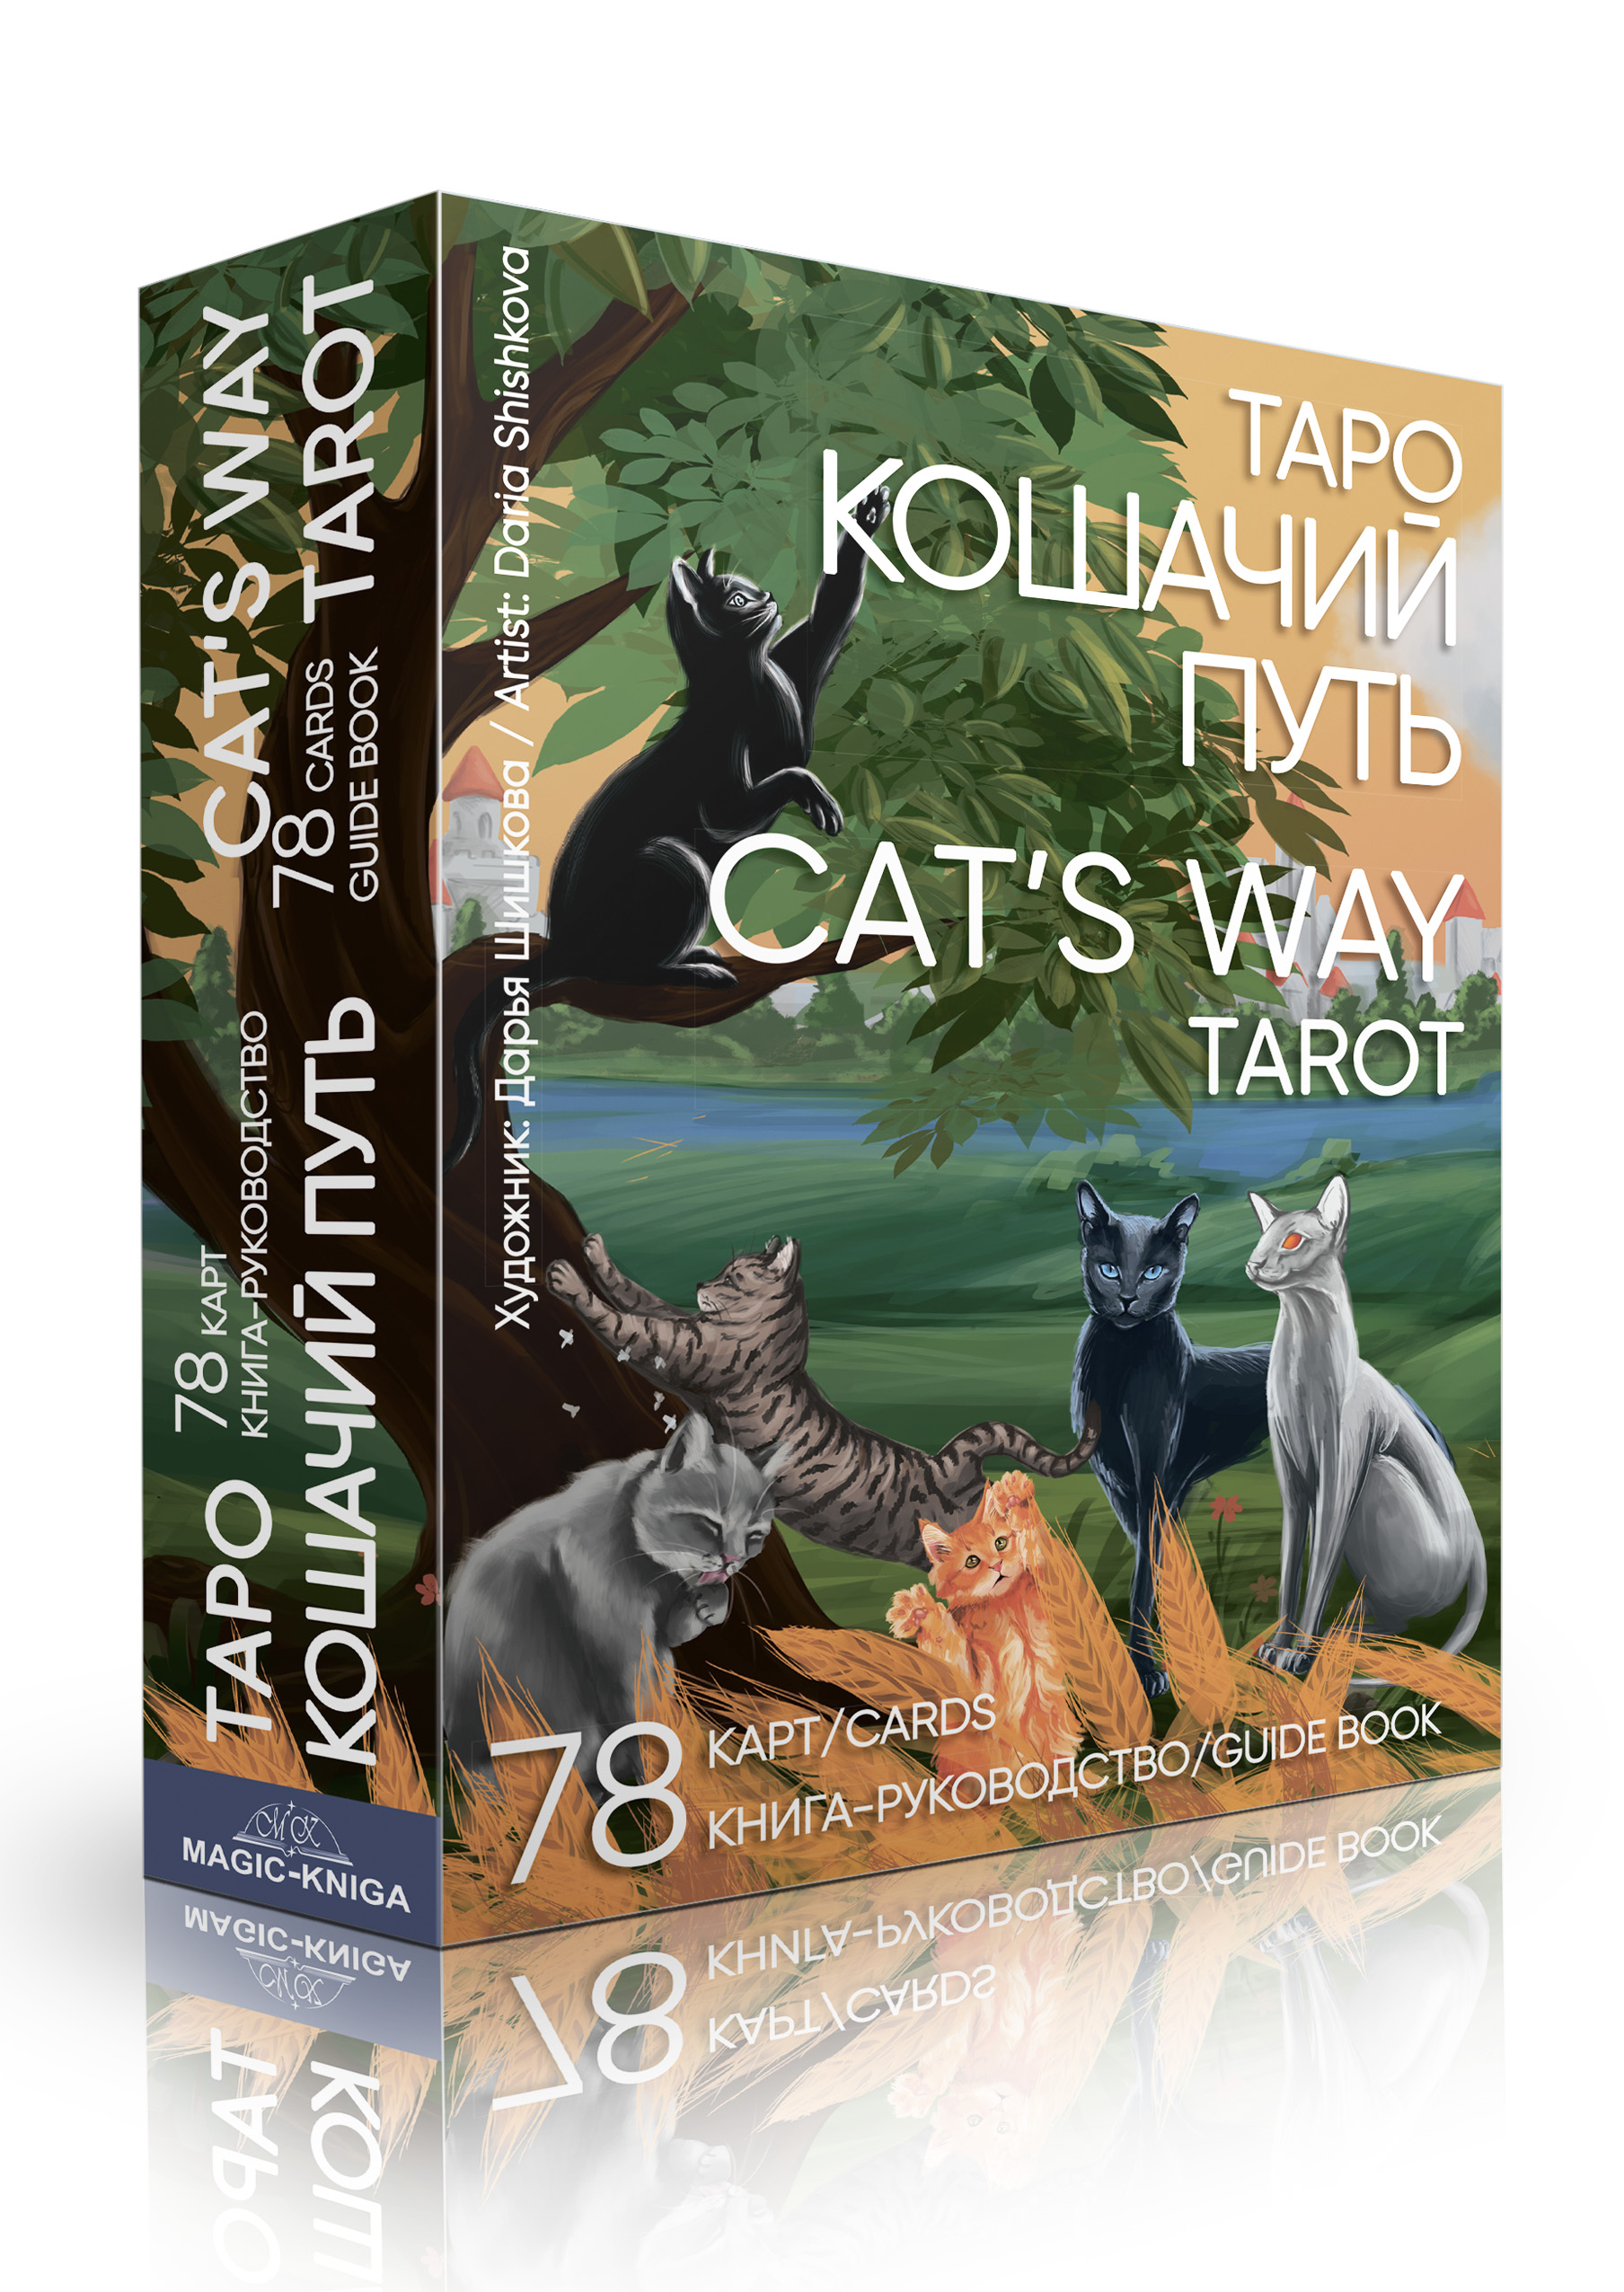 Карты Magic-Kniga Таро Кошачий путь Cat`s Way Tarot